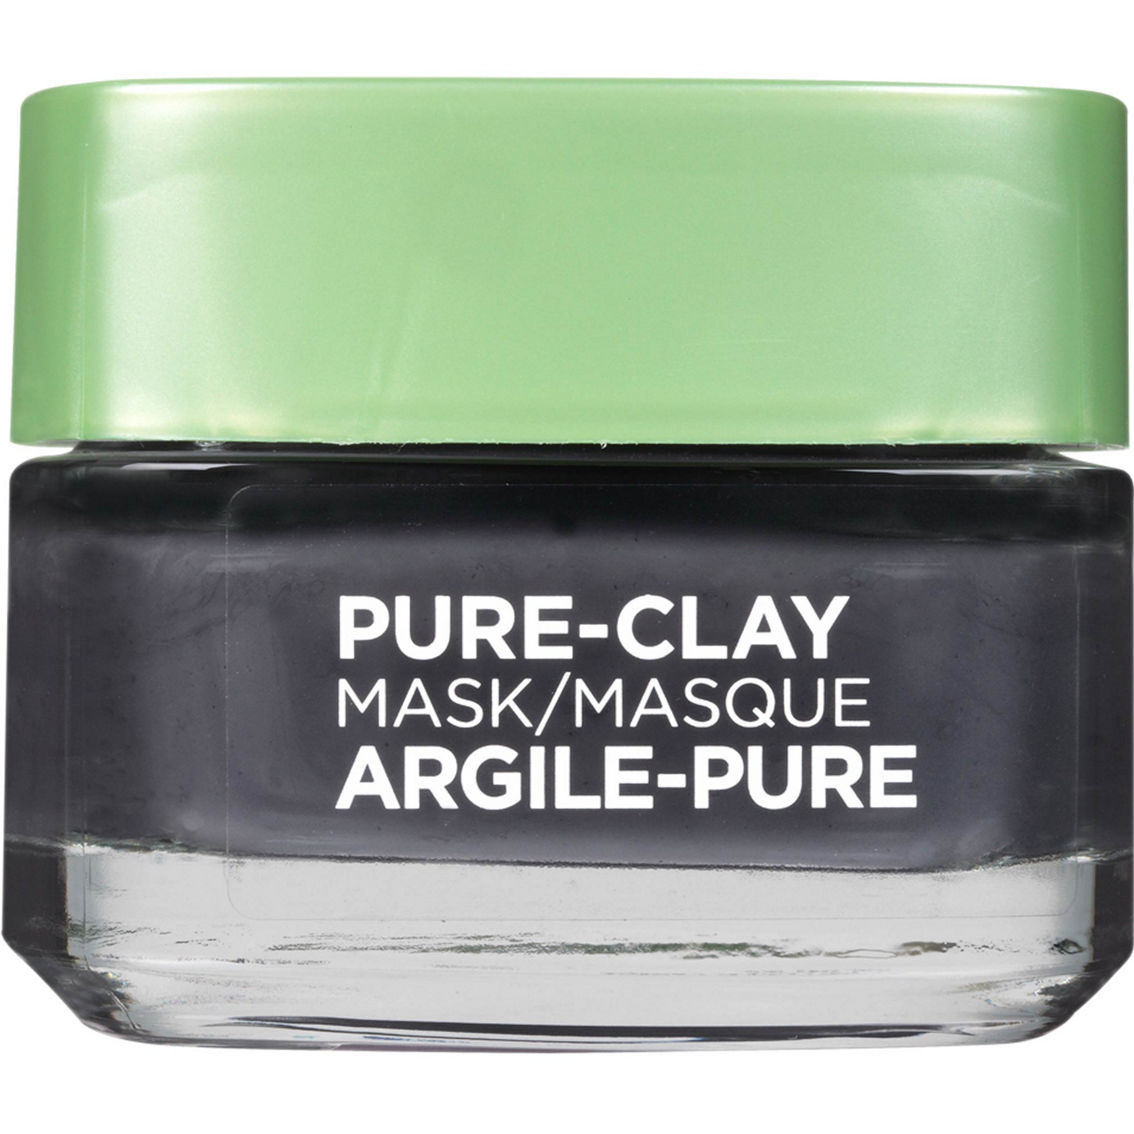 L'Oreal Pure Clay Mask Exfoliate and Refine Pores - Image 2 of 2